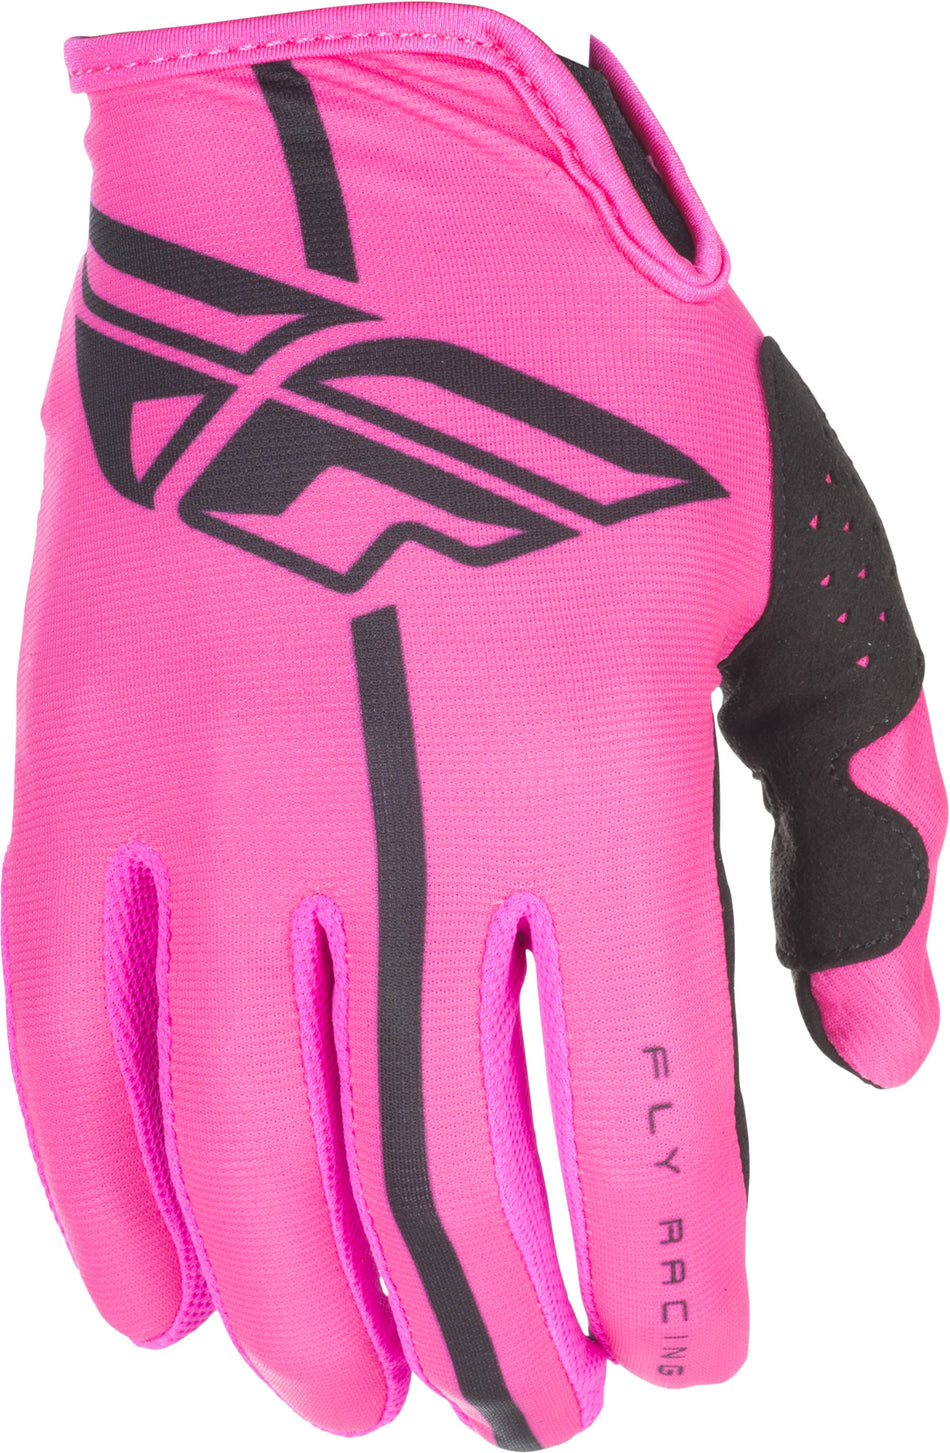 FLY RACING Lite Gloves Neon Pink/Black Sz 13 371-01713